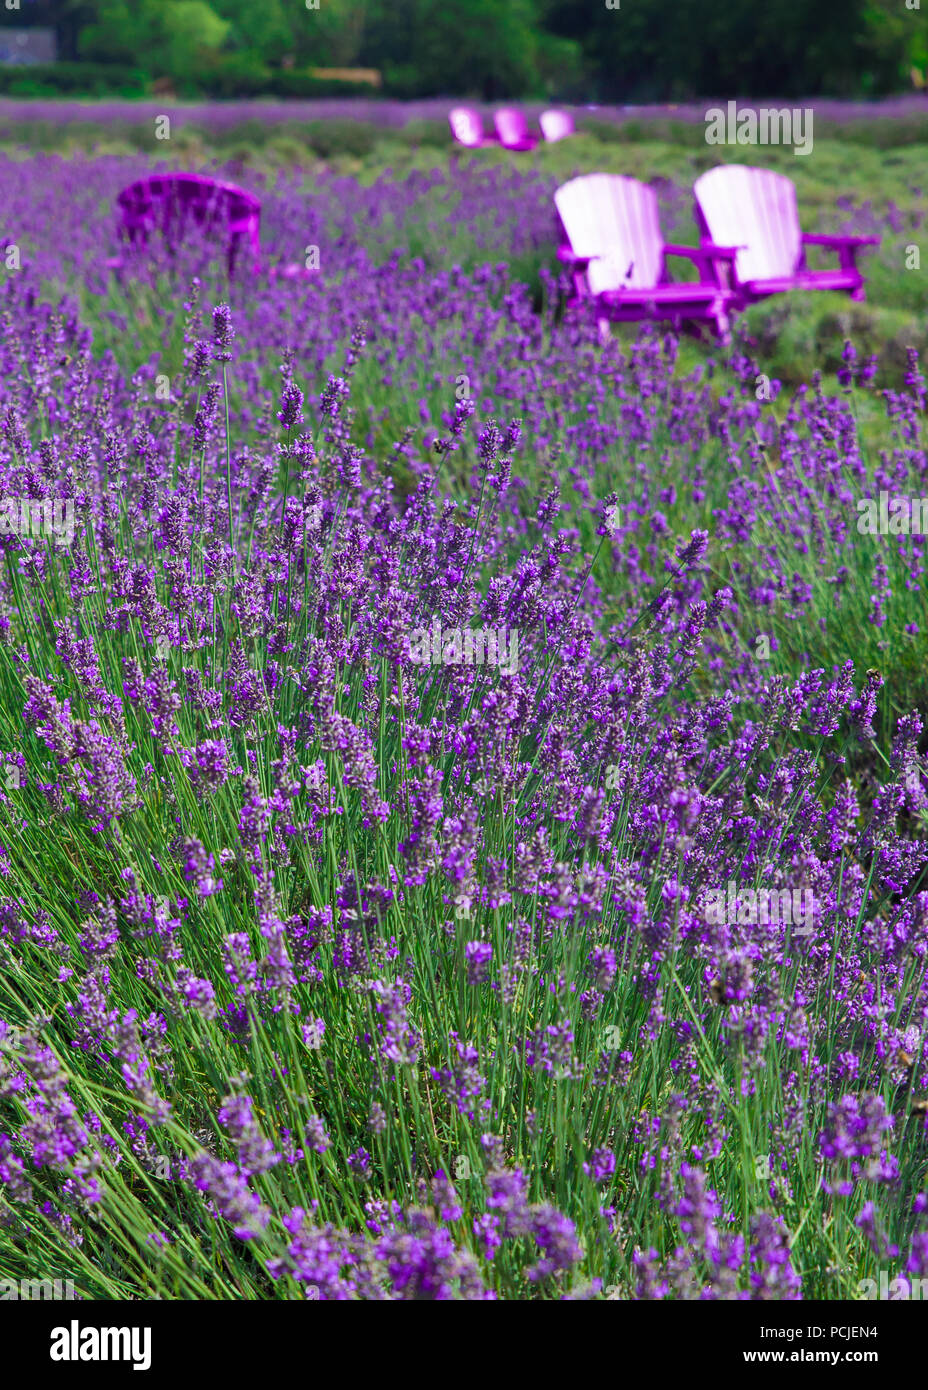 Beautiful lavender field with adirondack chairs, Long Island New York Stock Photo